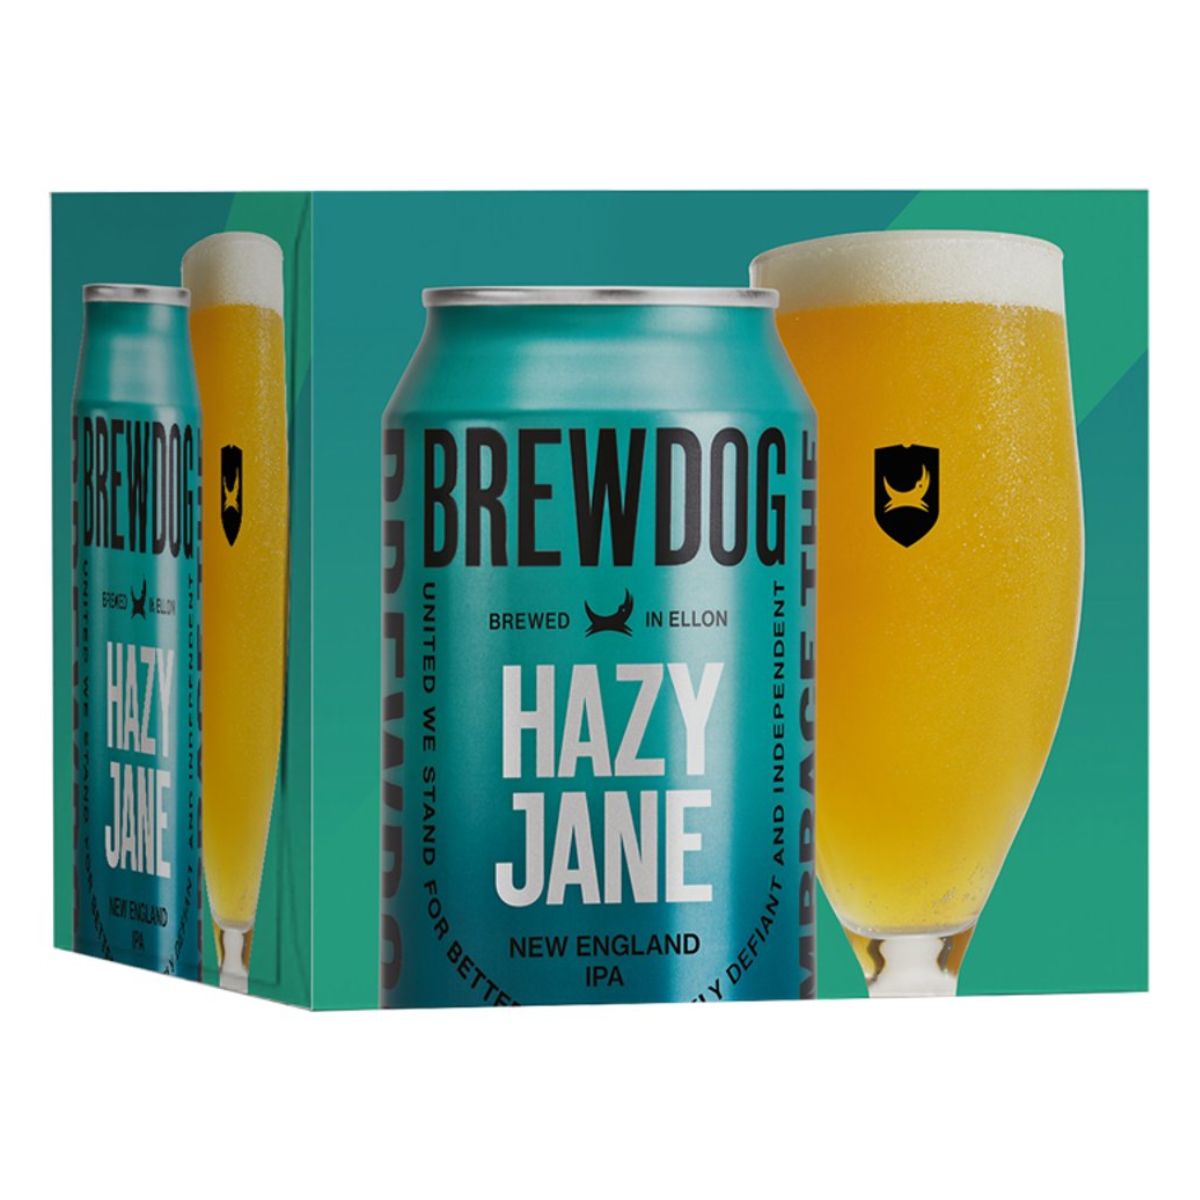 BrewDog - Hazy Jane New England IPA (5.0% ABV) - 4 x 330ml pack.